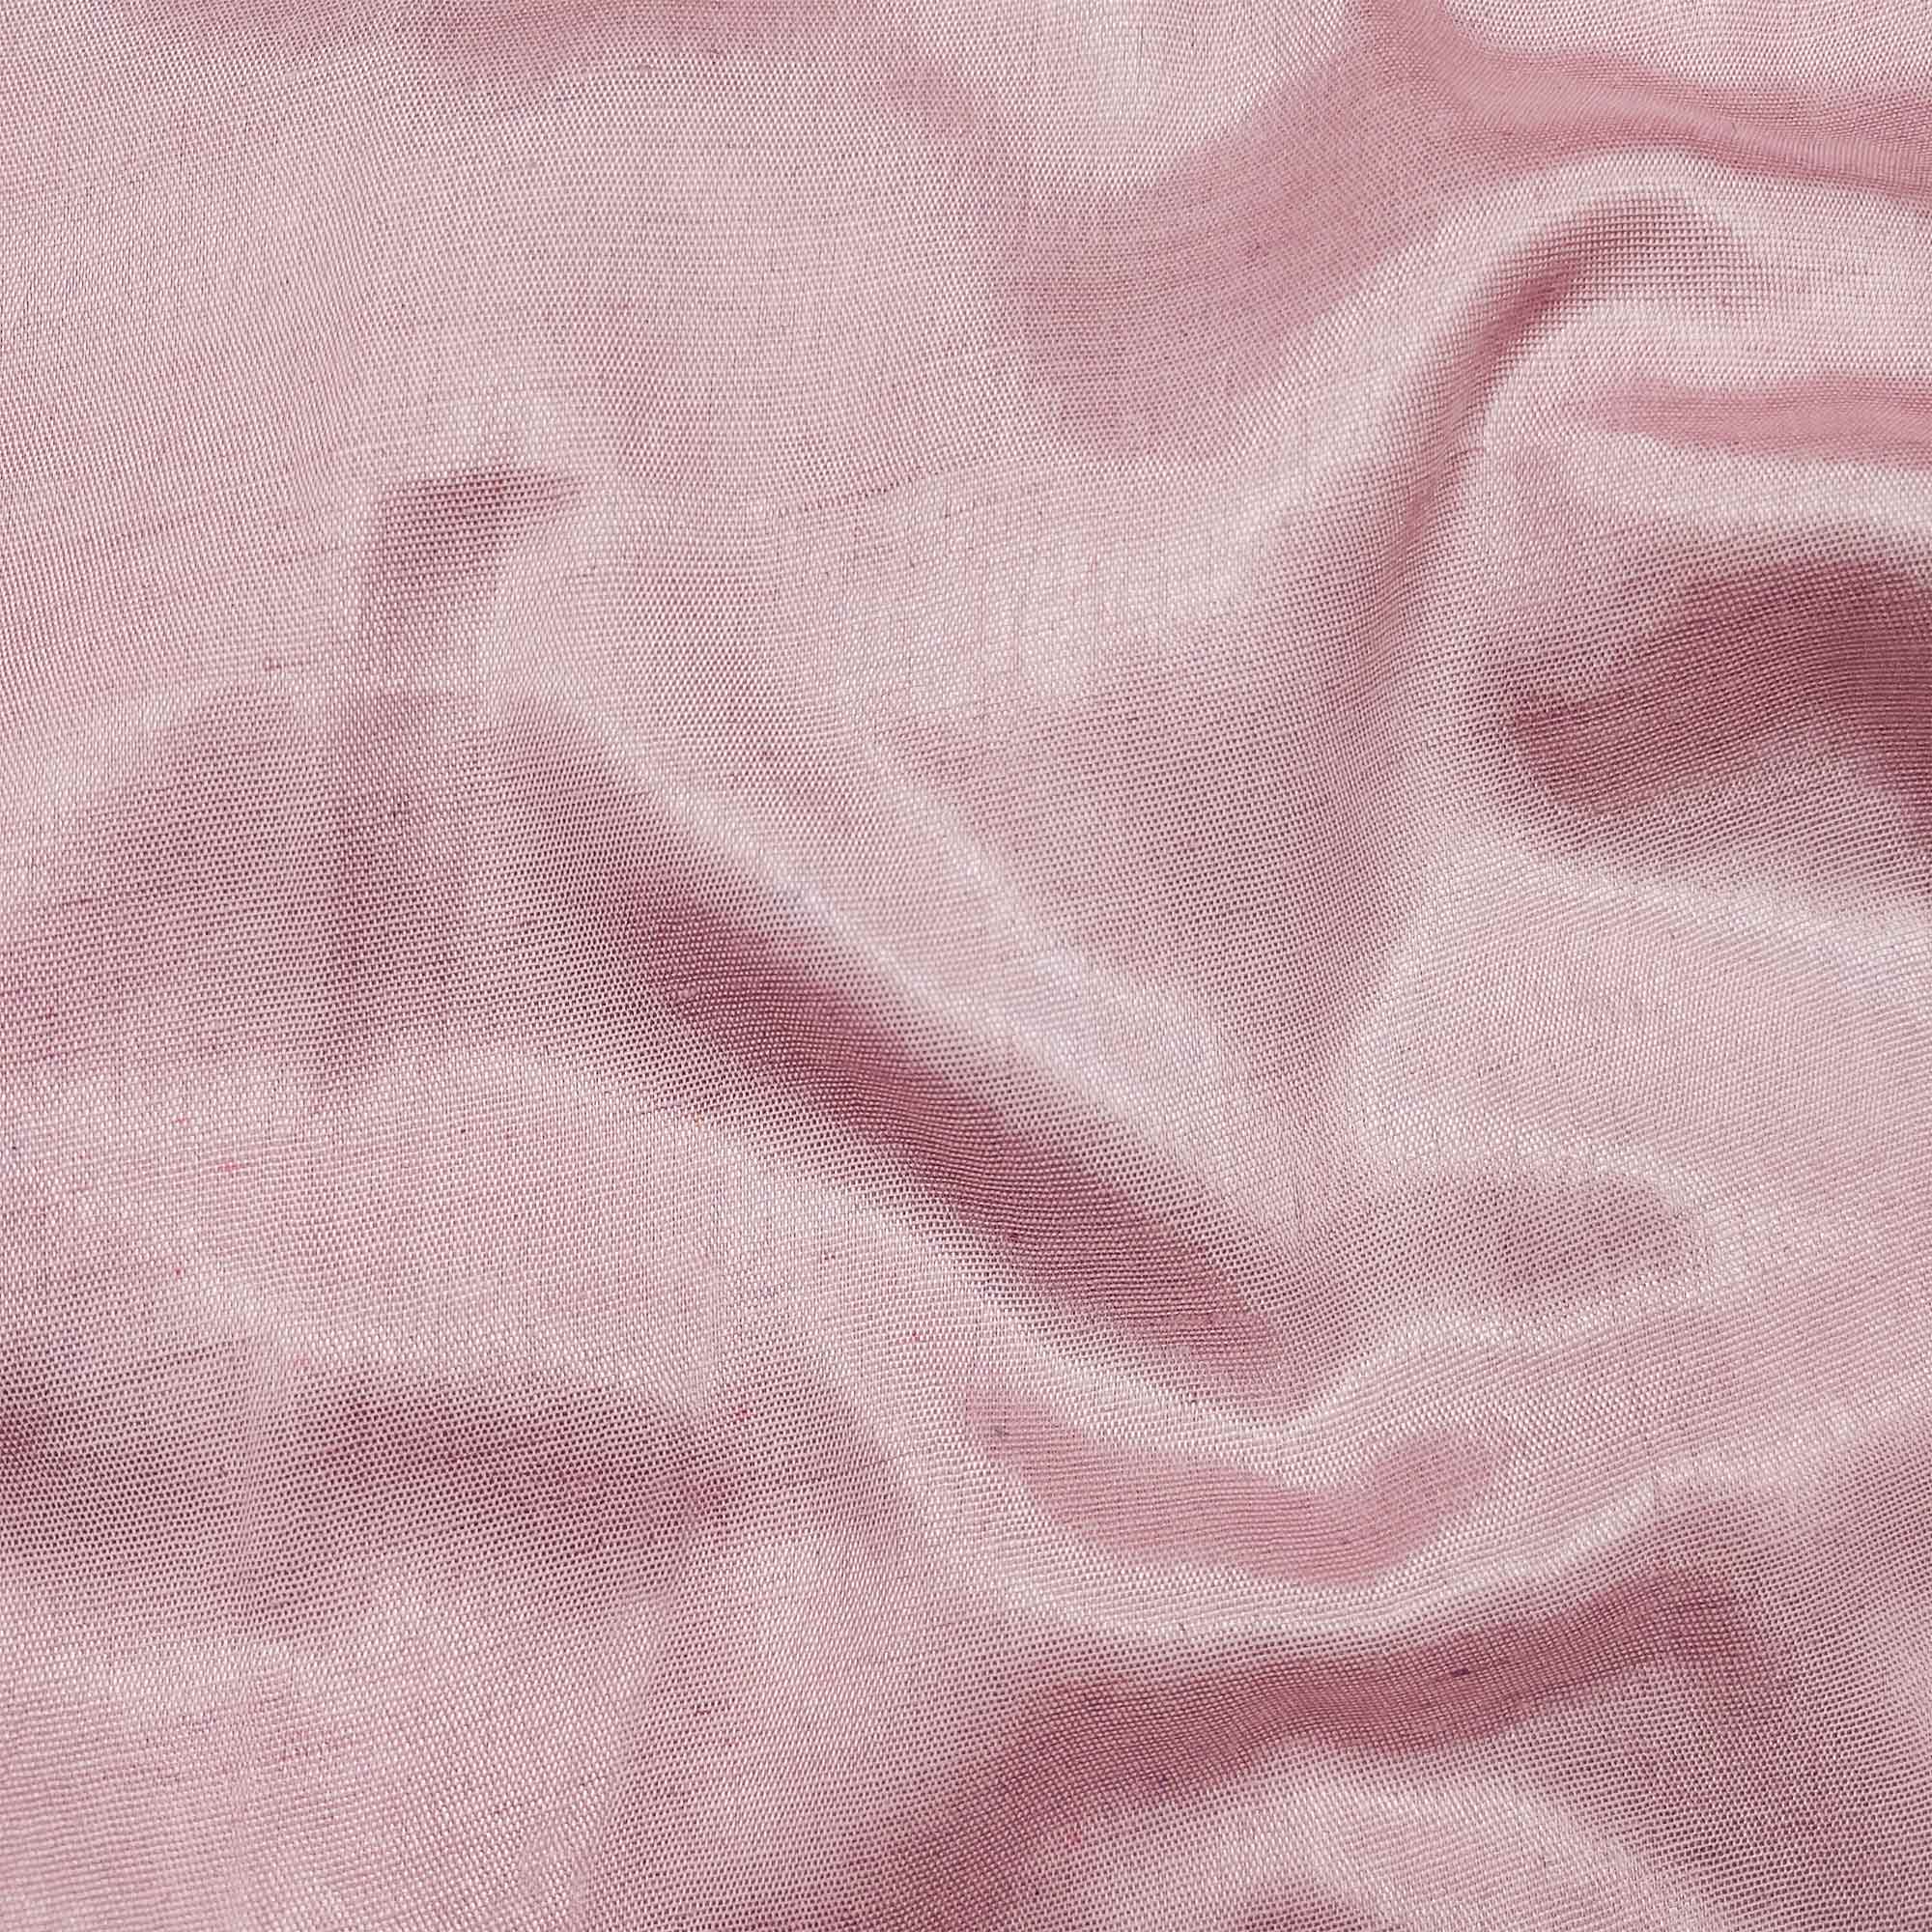 Light Pink Floral Printed Organza Dress Material